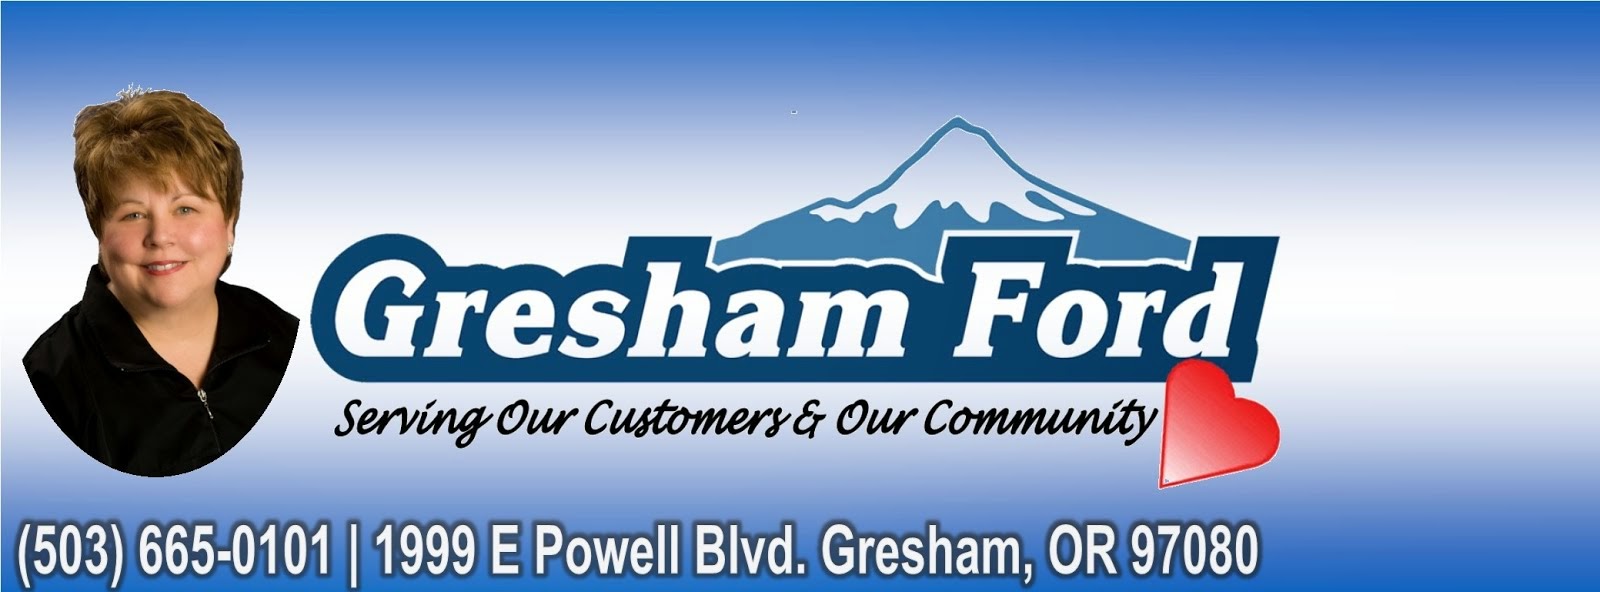 Gresham Ford's "Contribute to the Community" Program